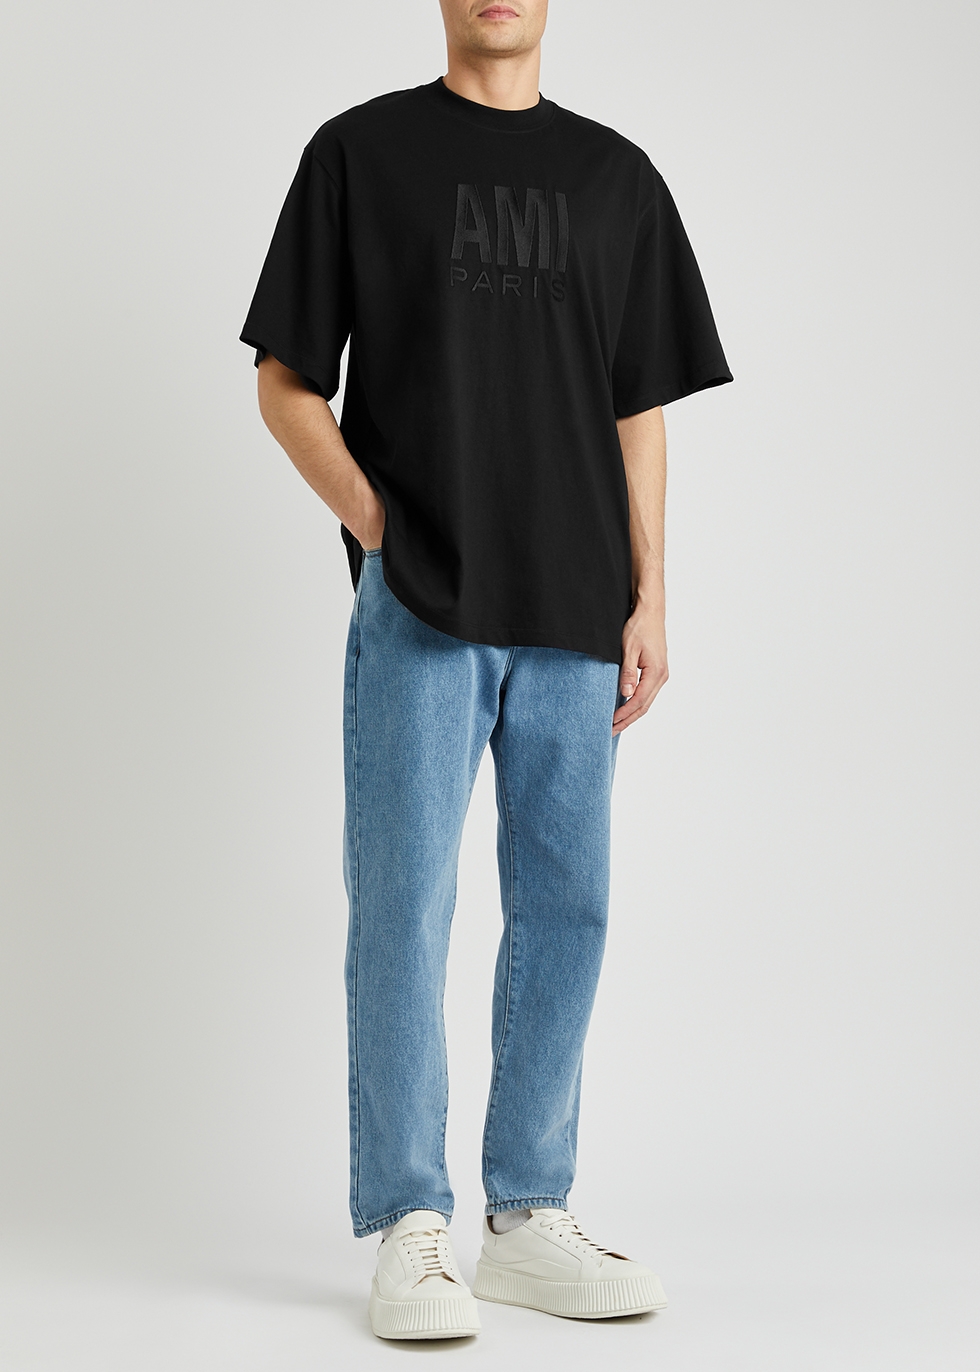 AMI Paris Black logo-embroidered cotton T-shirt - Harvey Nichols